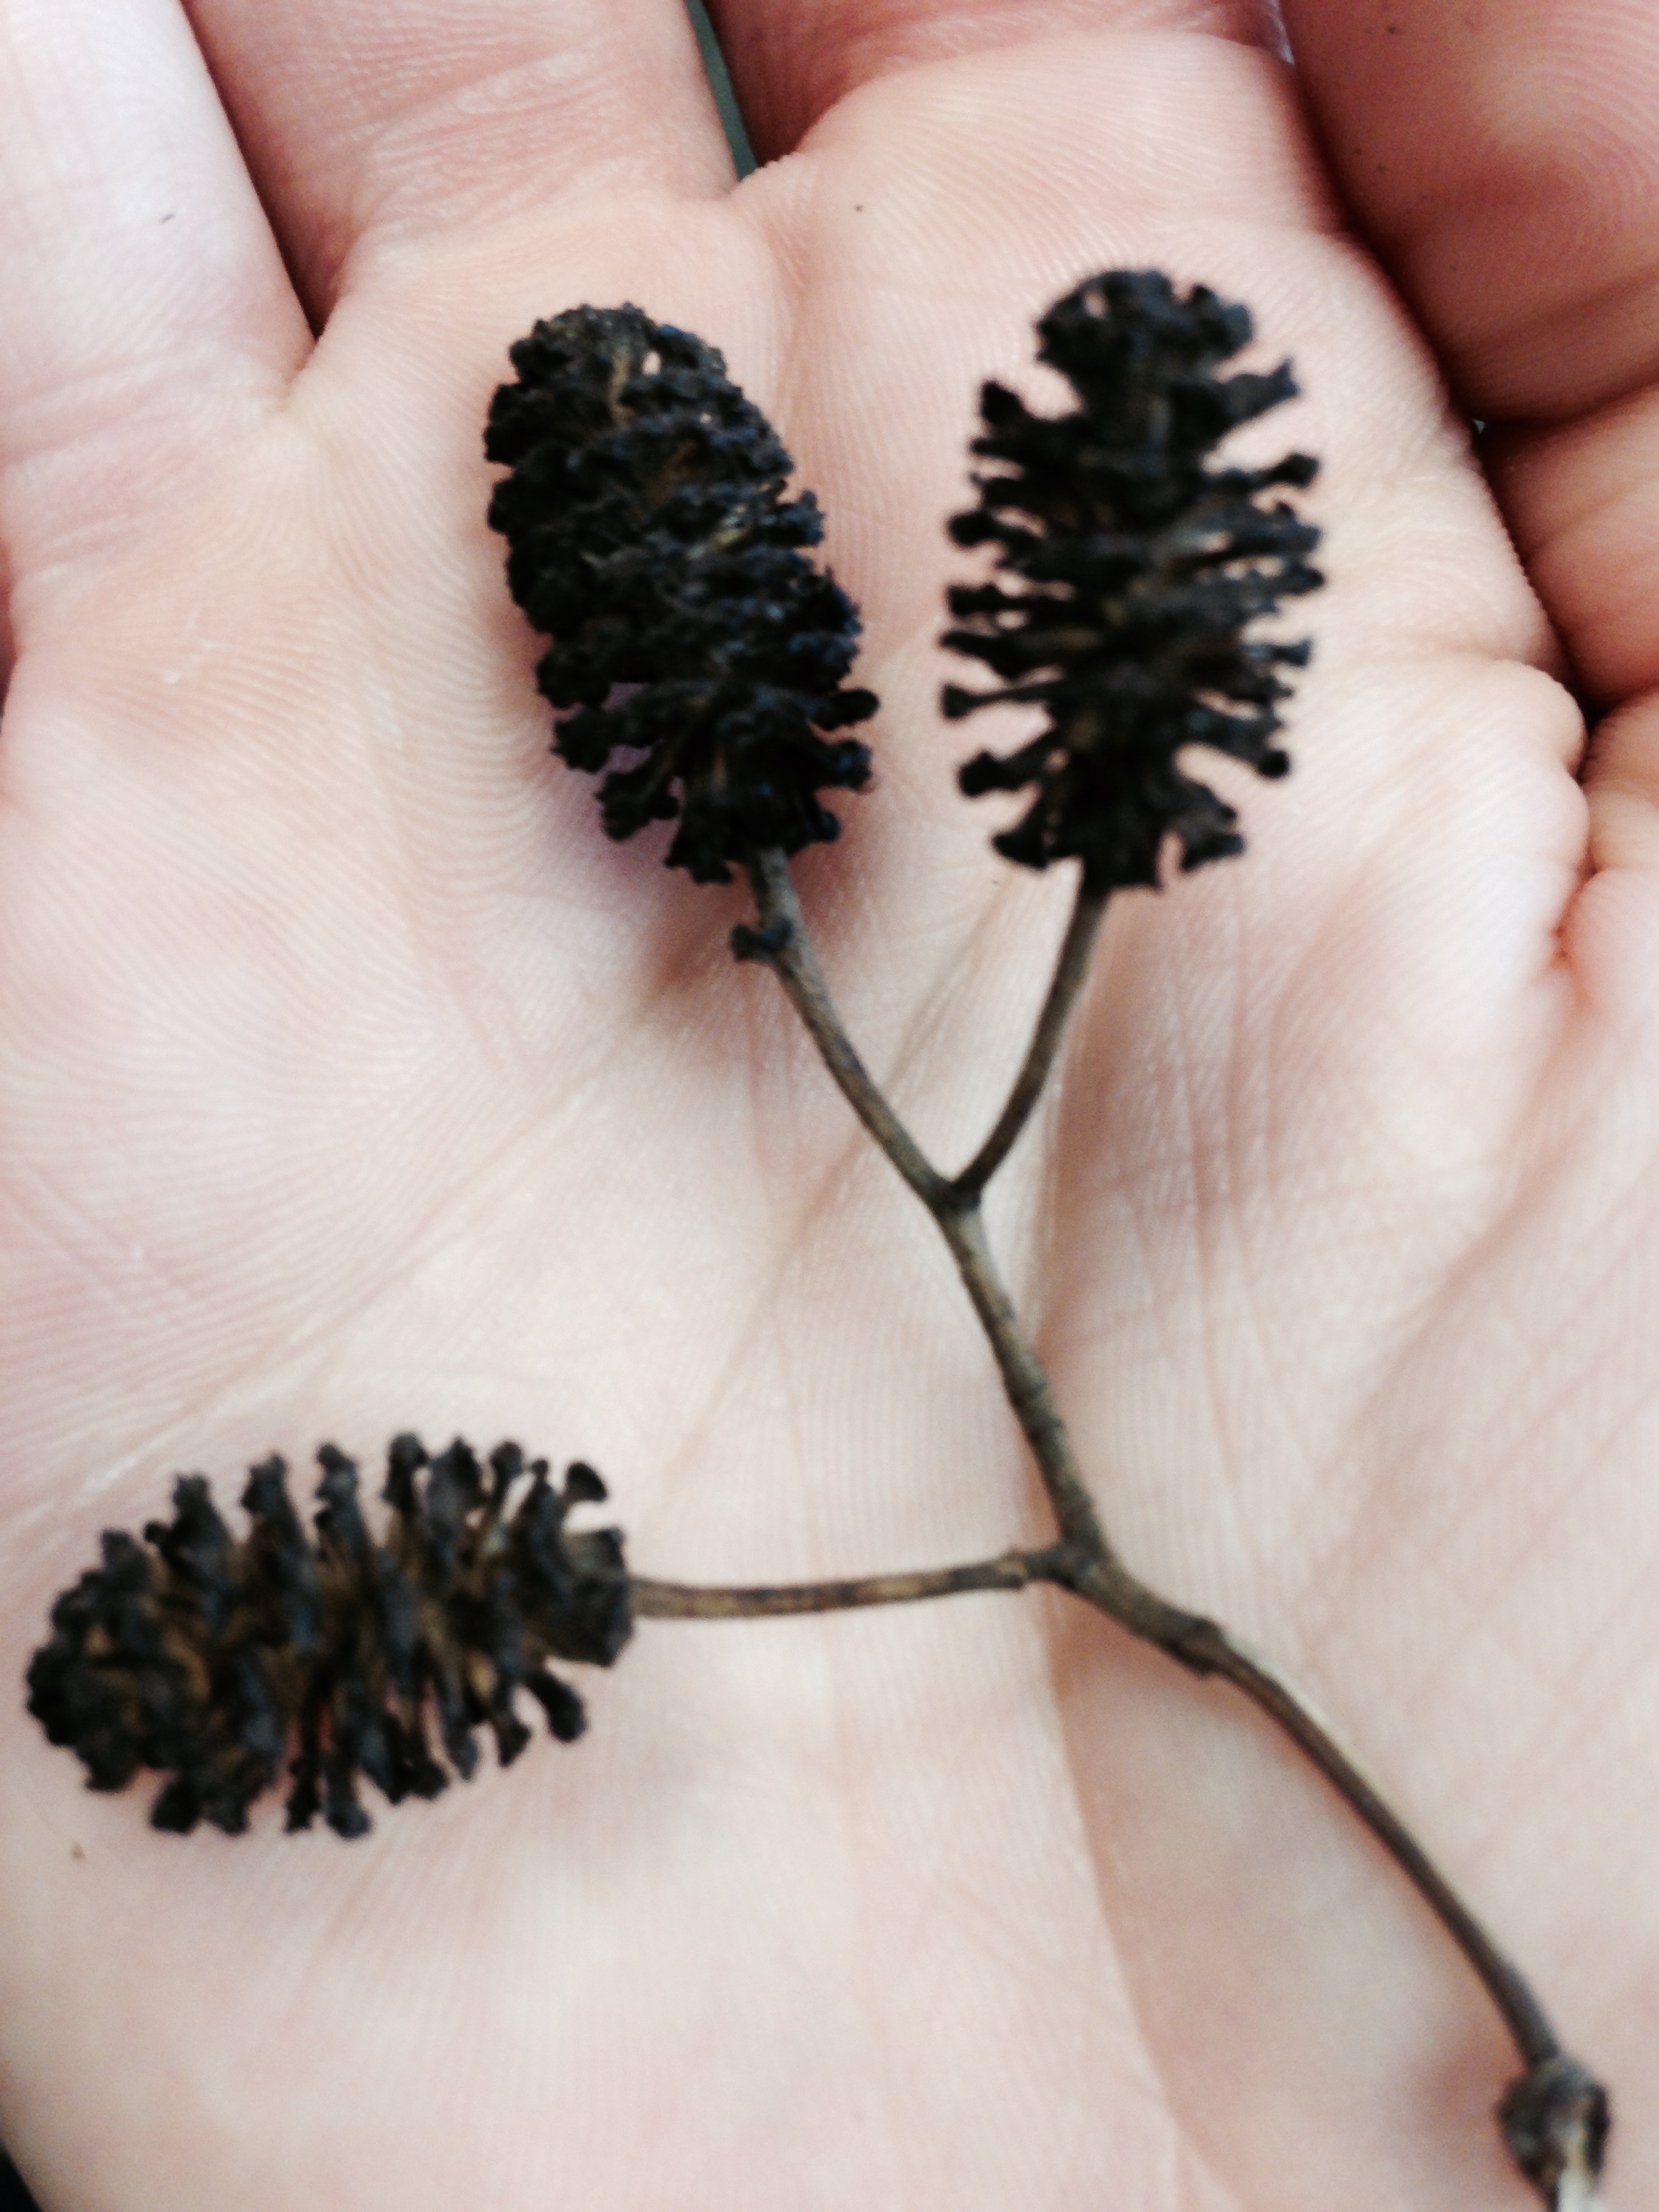 pine cone seeds look like